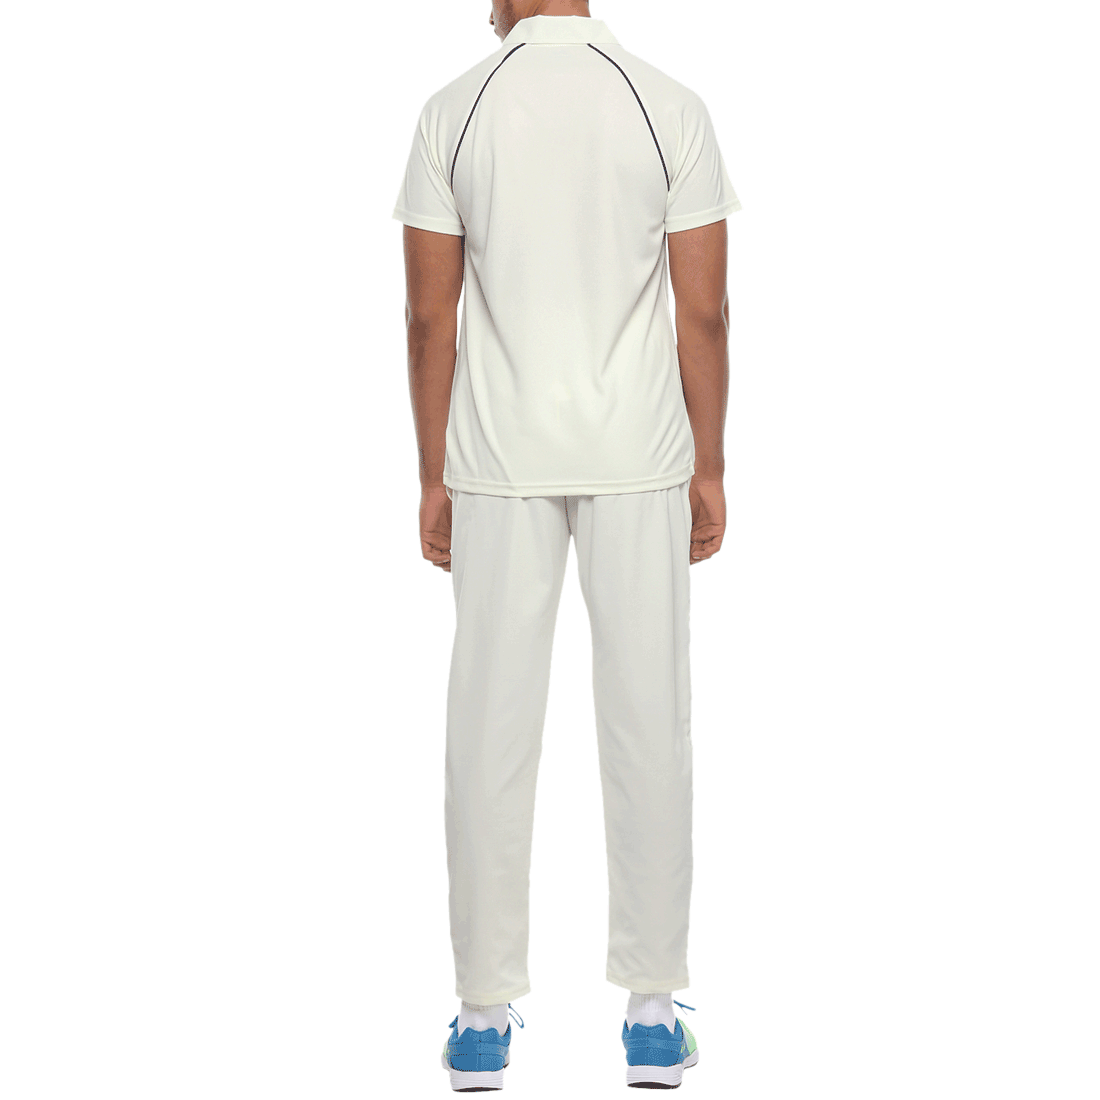 Customize Cricket White Dress | Instagram